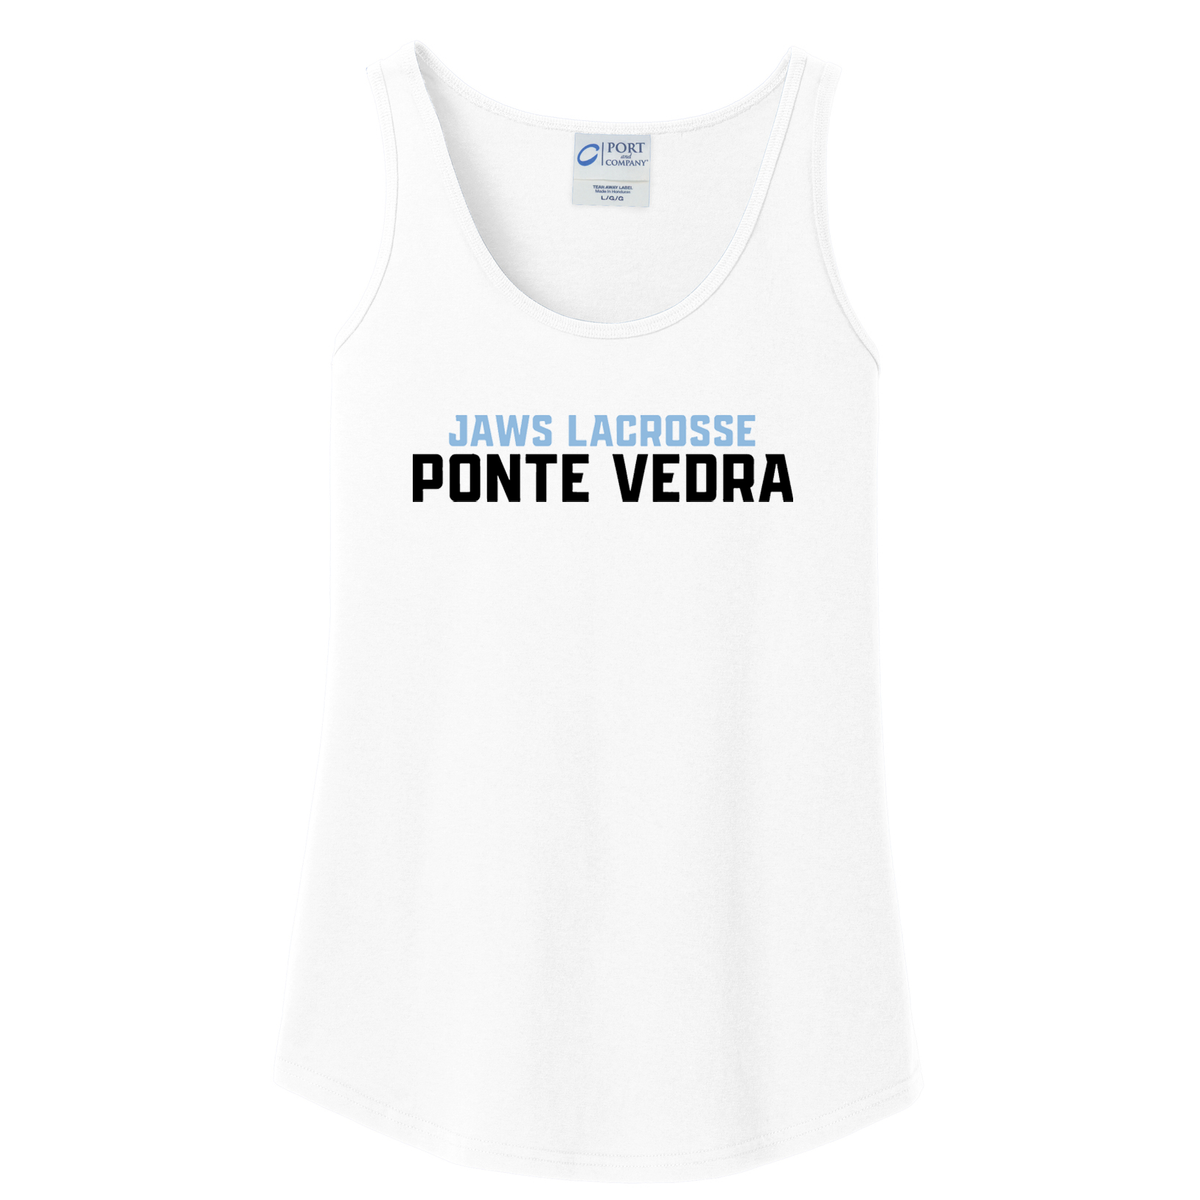 Ponte Vedra JAWS Lacrosse Women's Tank Top